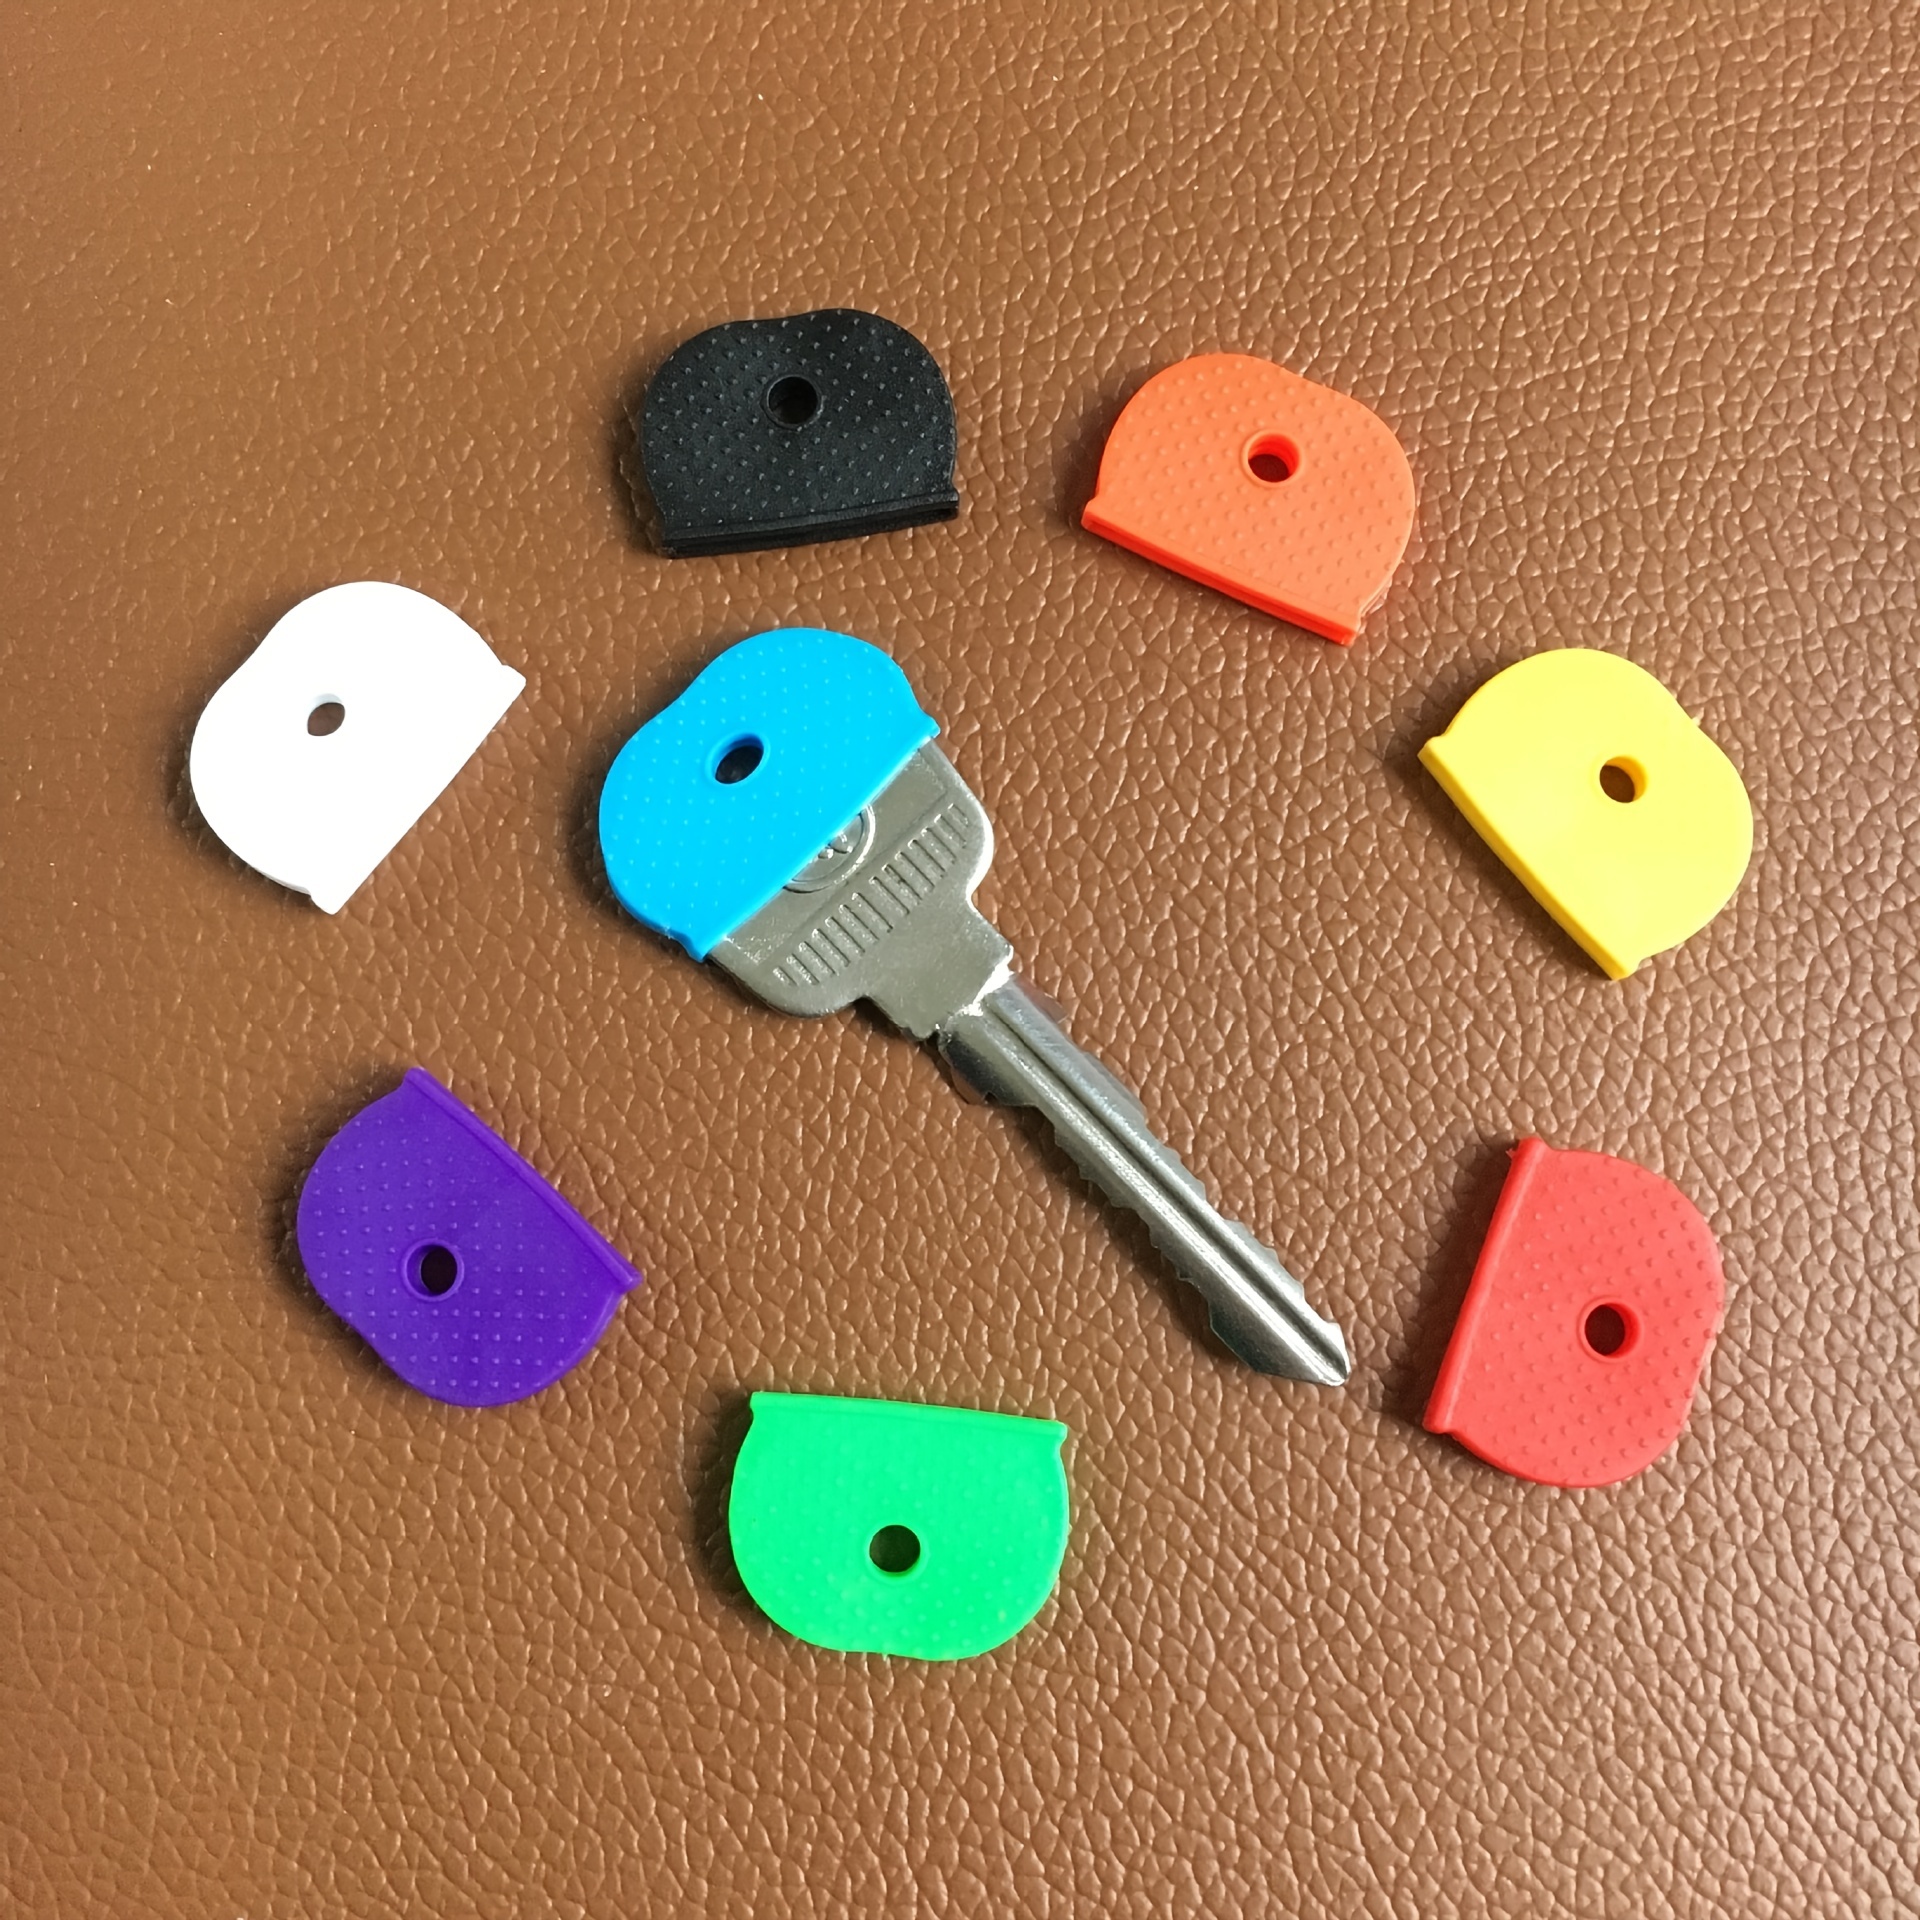 32pcs Silicone Elastic Key Caps Set Flexible Key Covers Key Identifier Tag  Covers For Easy Identifying Door Keys